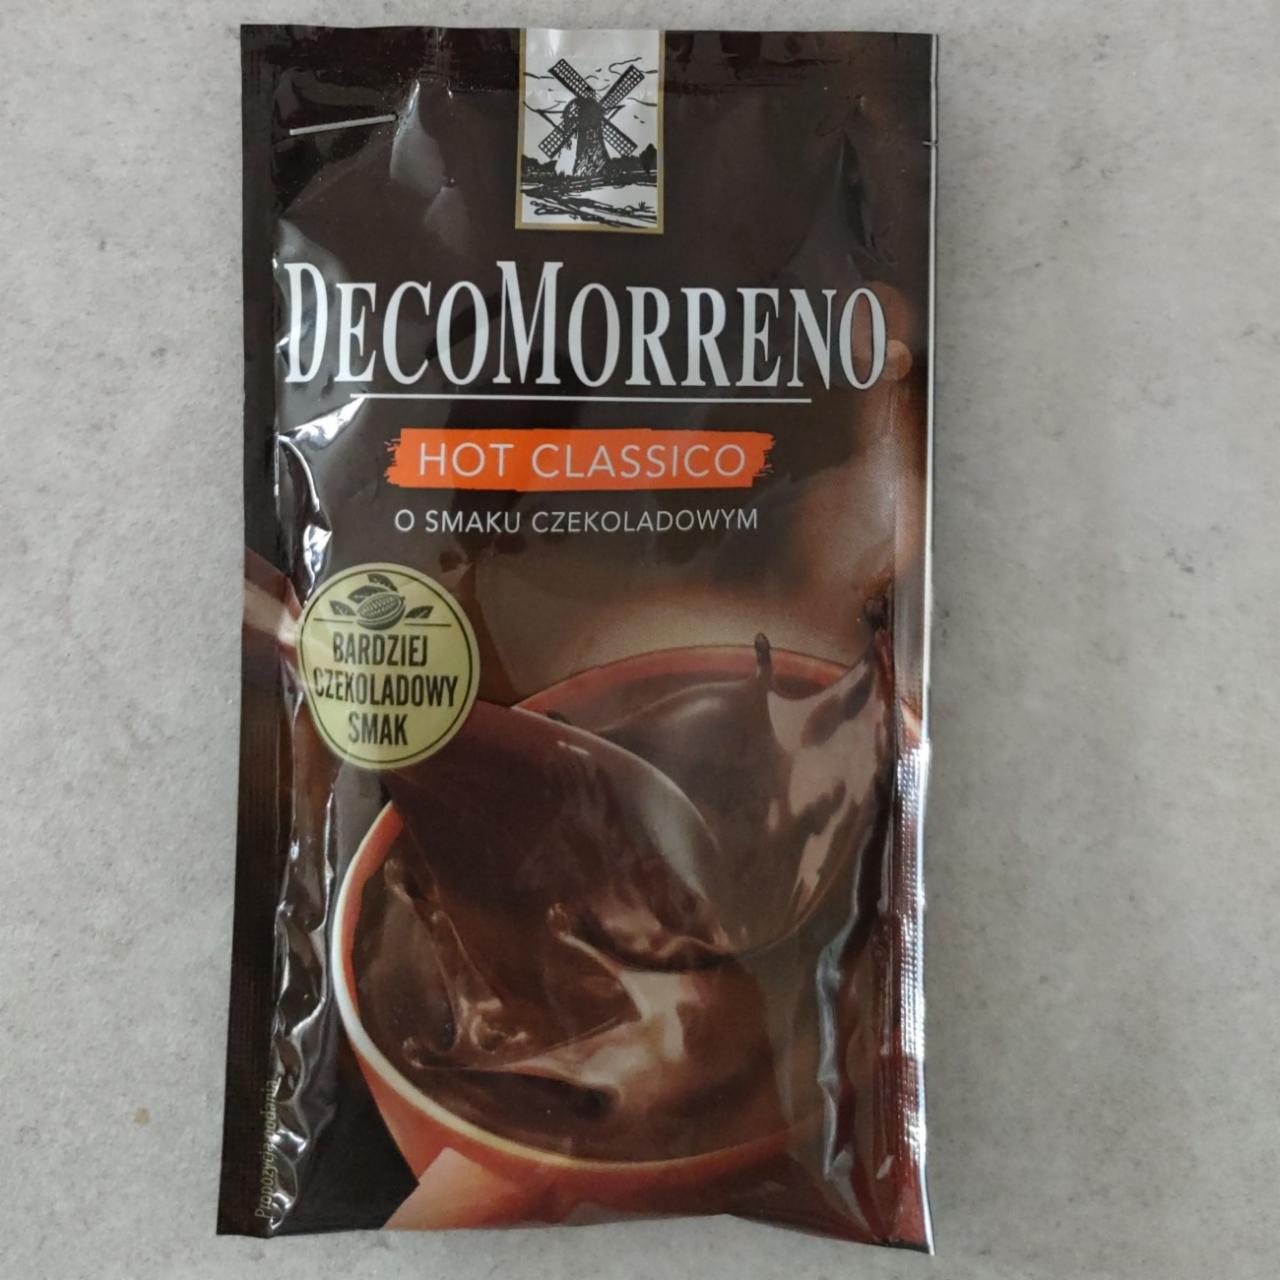 Фото - Chocolatta Hot Classico o smaku czekoladowym La Festa DeccoMorreno